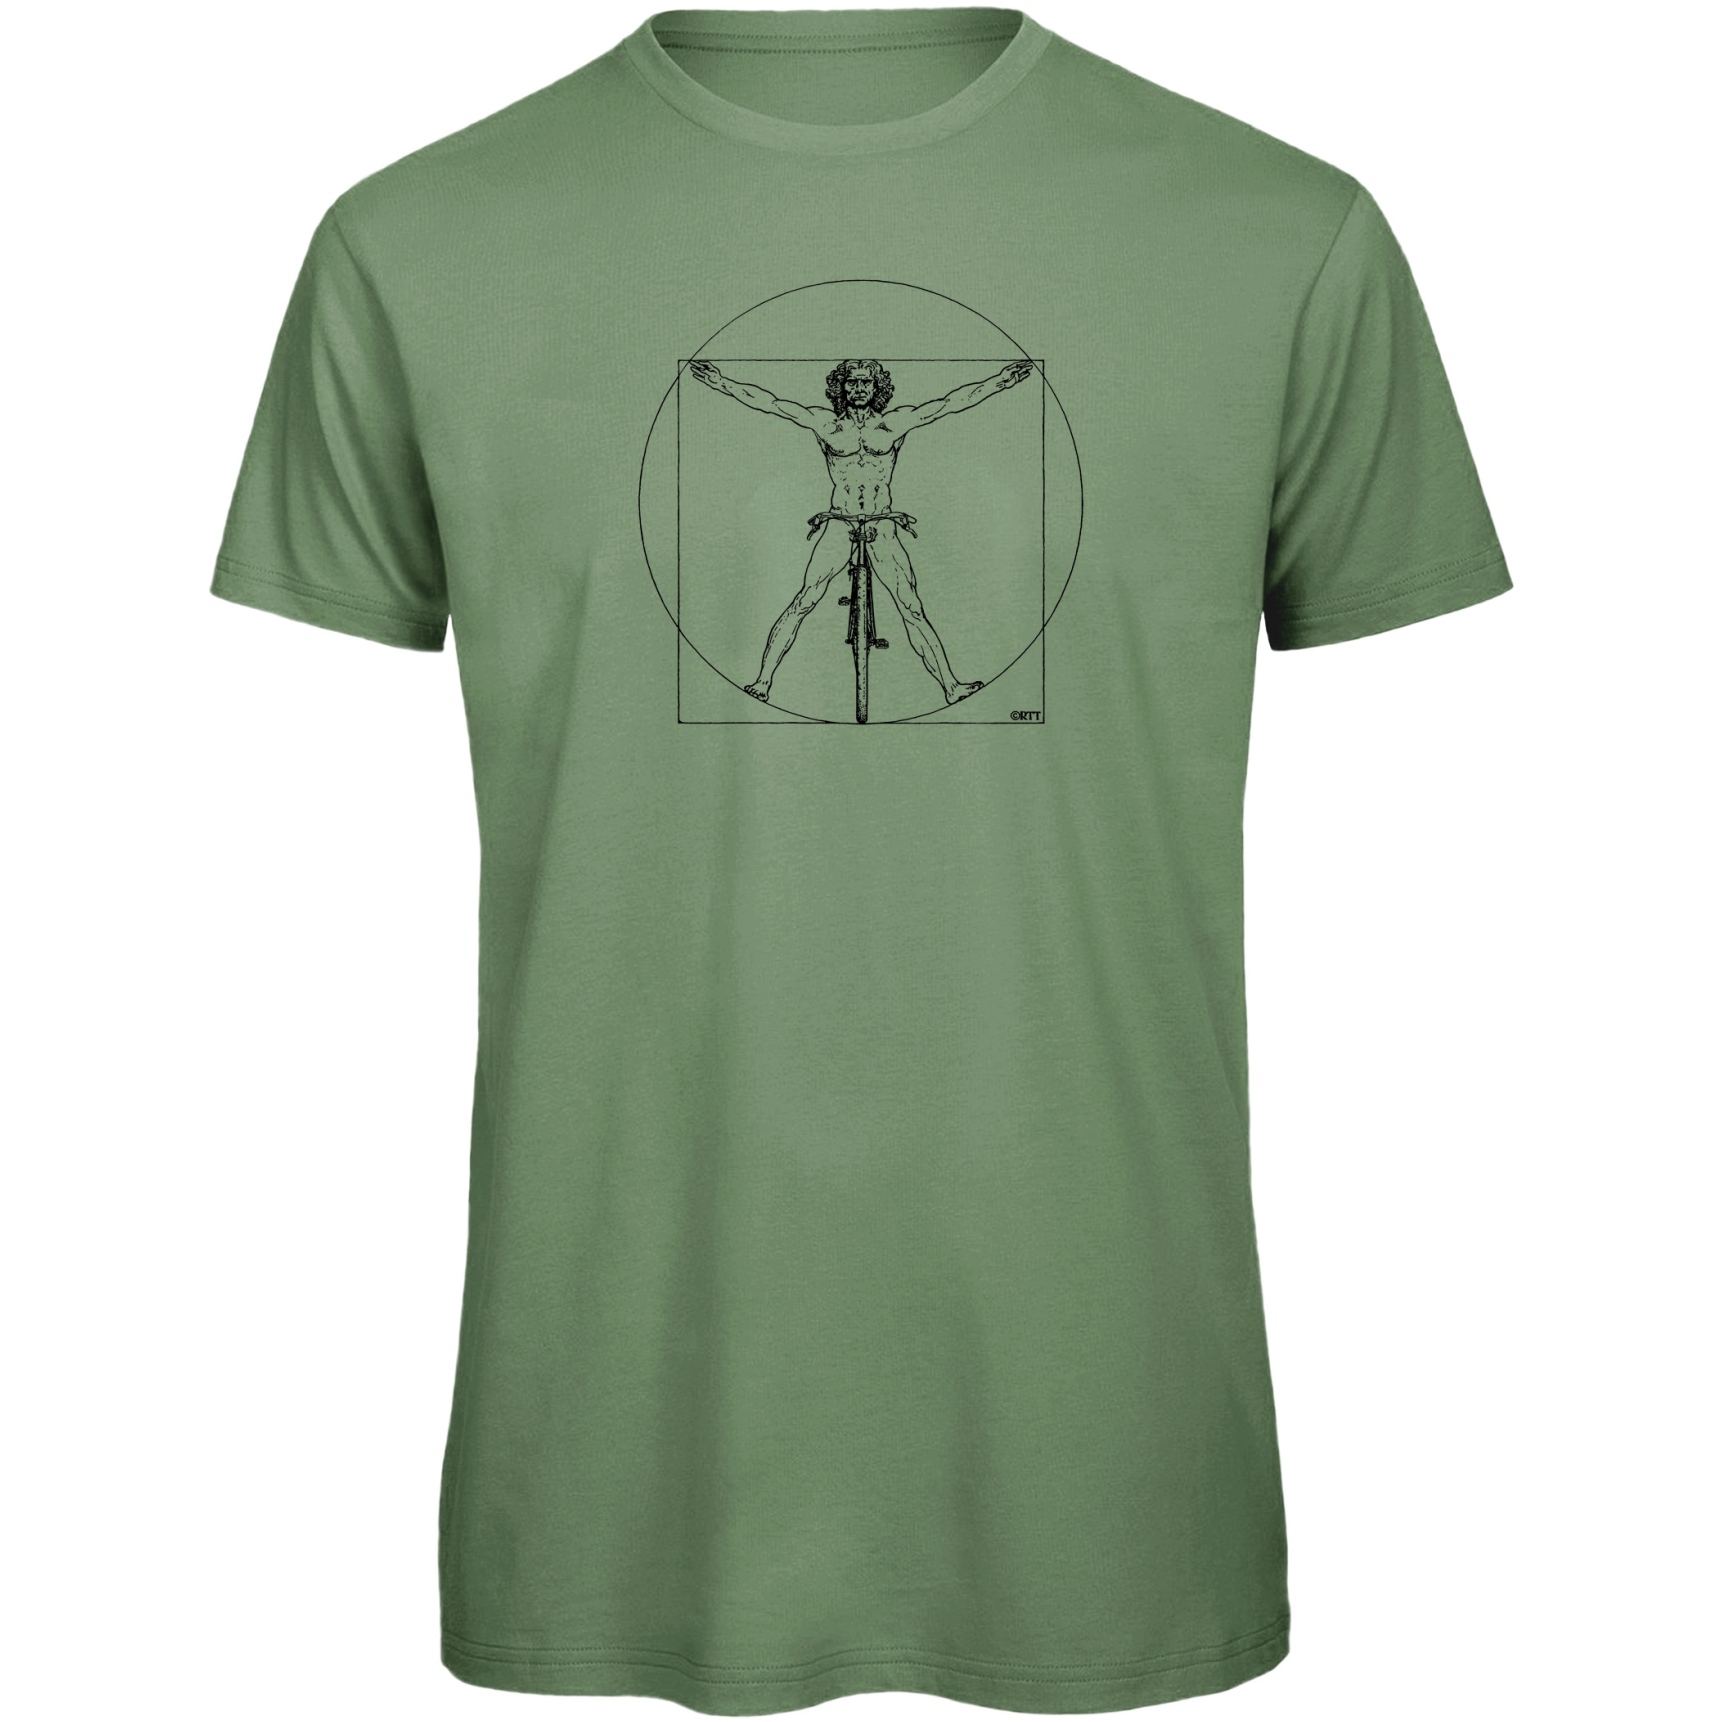 Imagen de RTTshirts Camiseta Bicicleta - DaVinci - verde claro